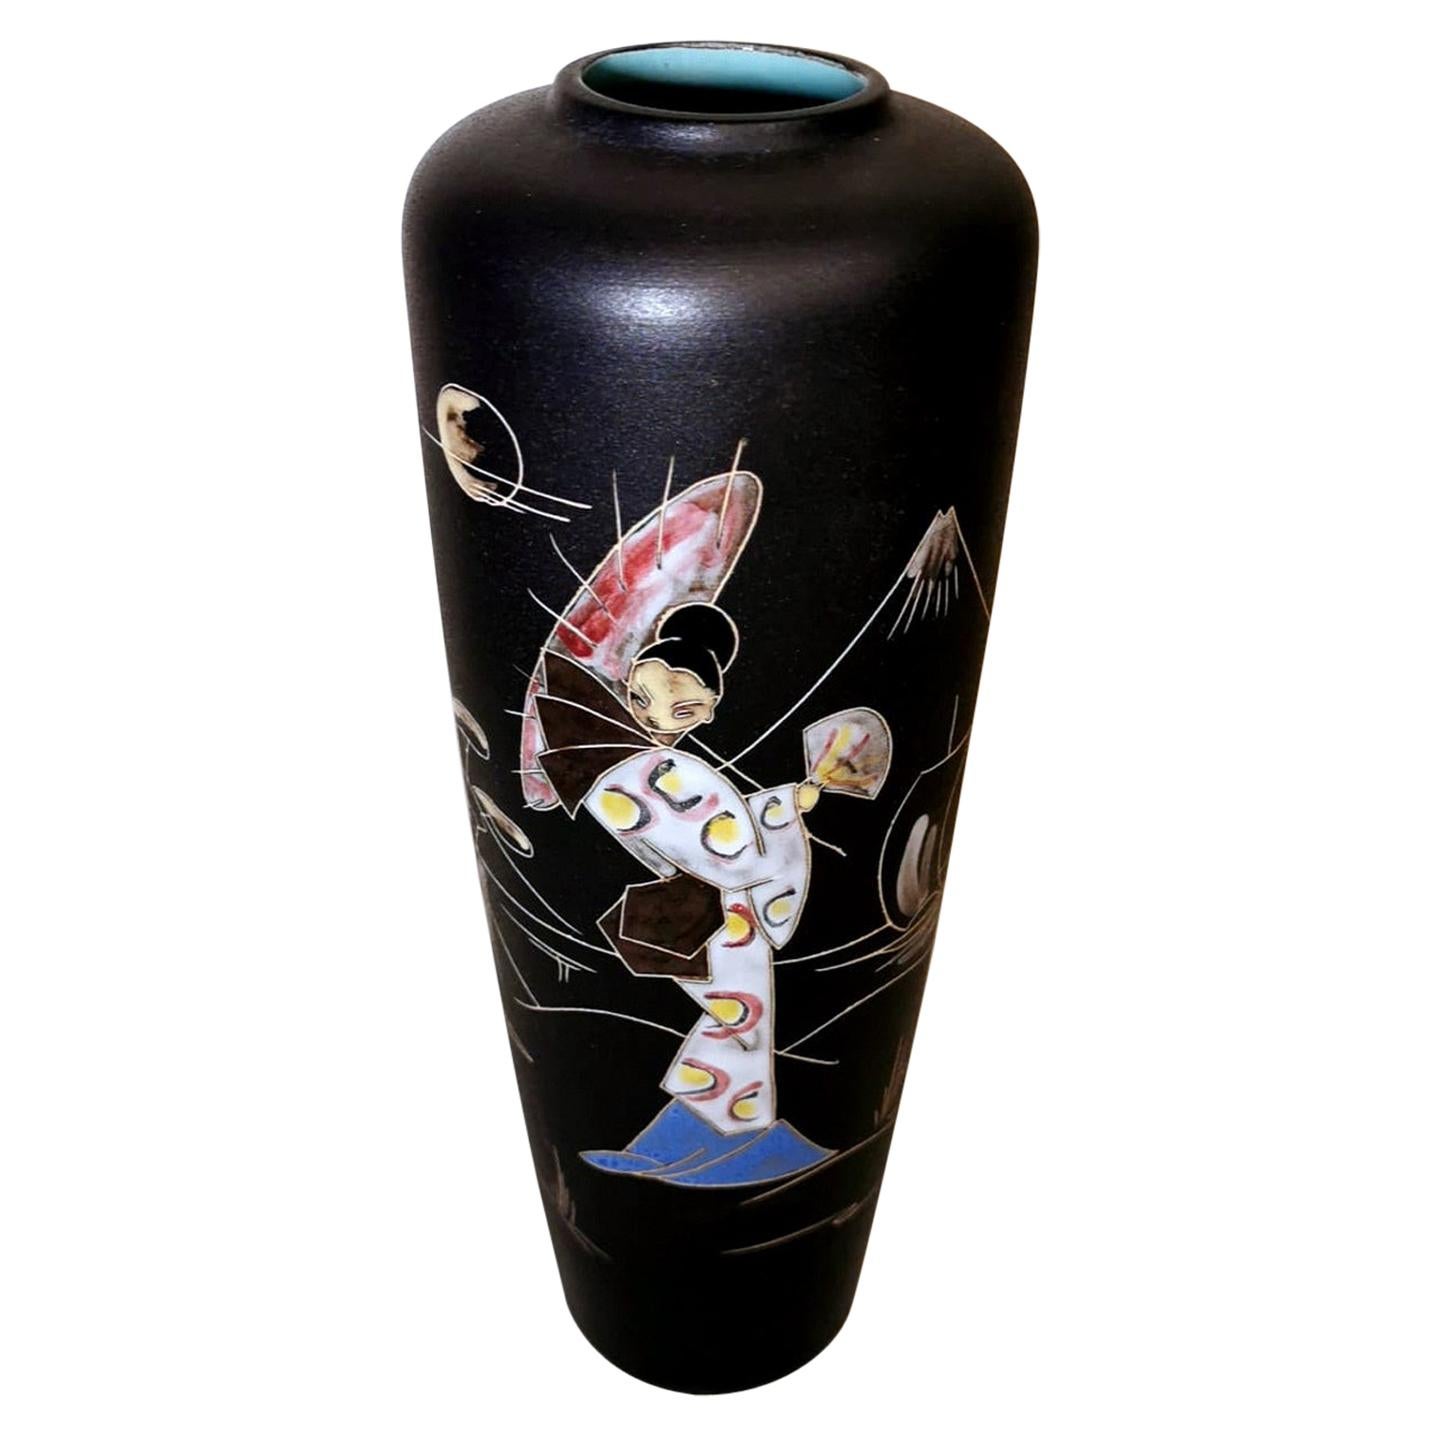 Ruscha Keramik Germany Vintage Ceramic Vase With Japanese Decoration